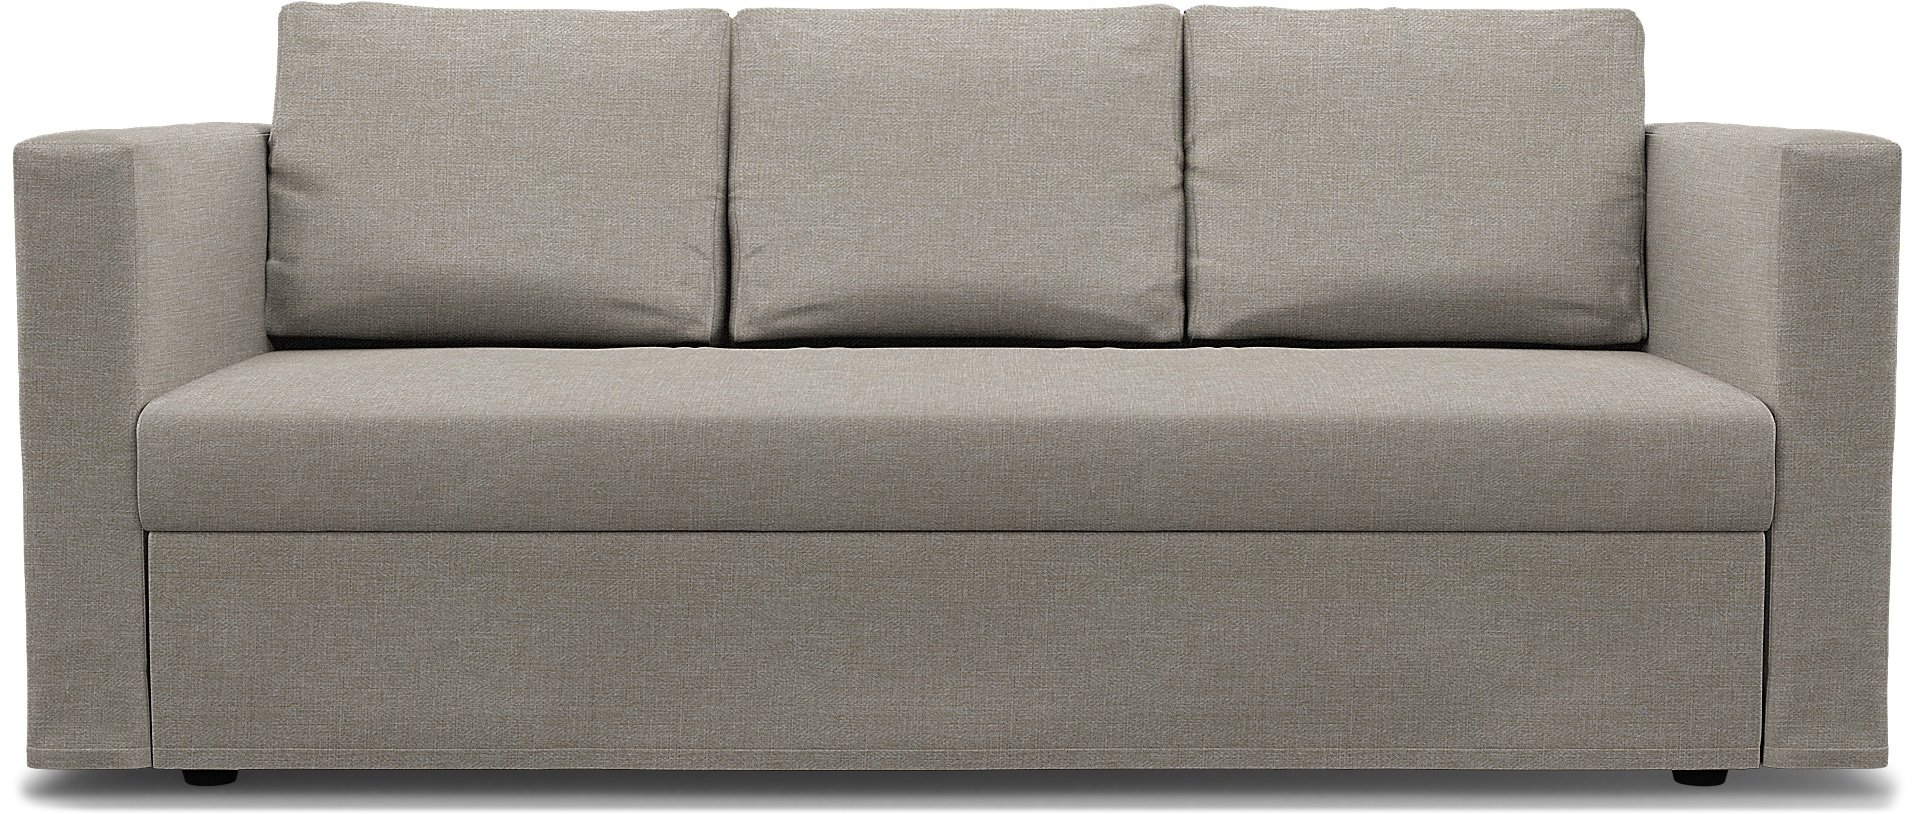 IKEA - Friheten 3 Seater Sofa Bed Cover, Greige, Boucle & Texture - Bemz